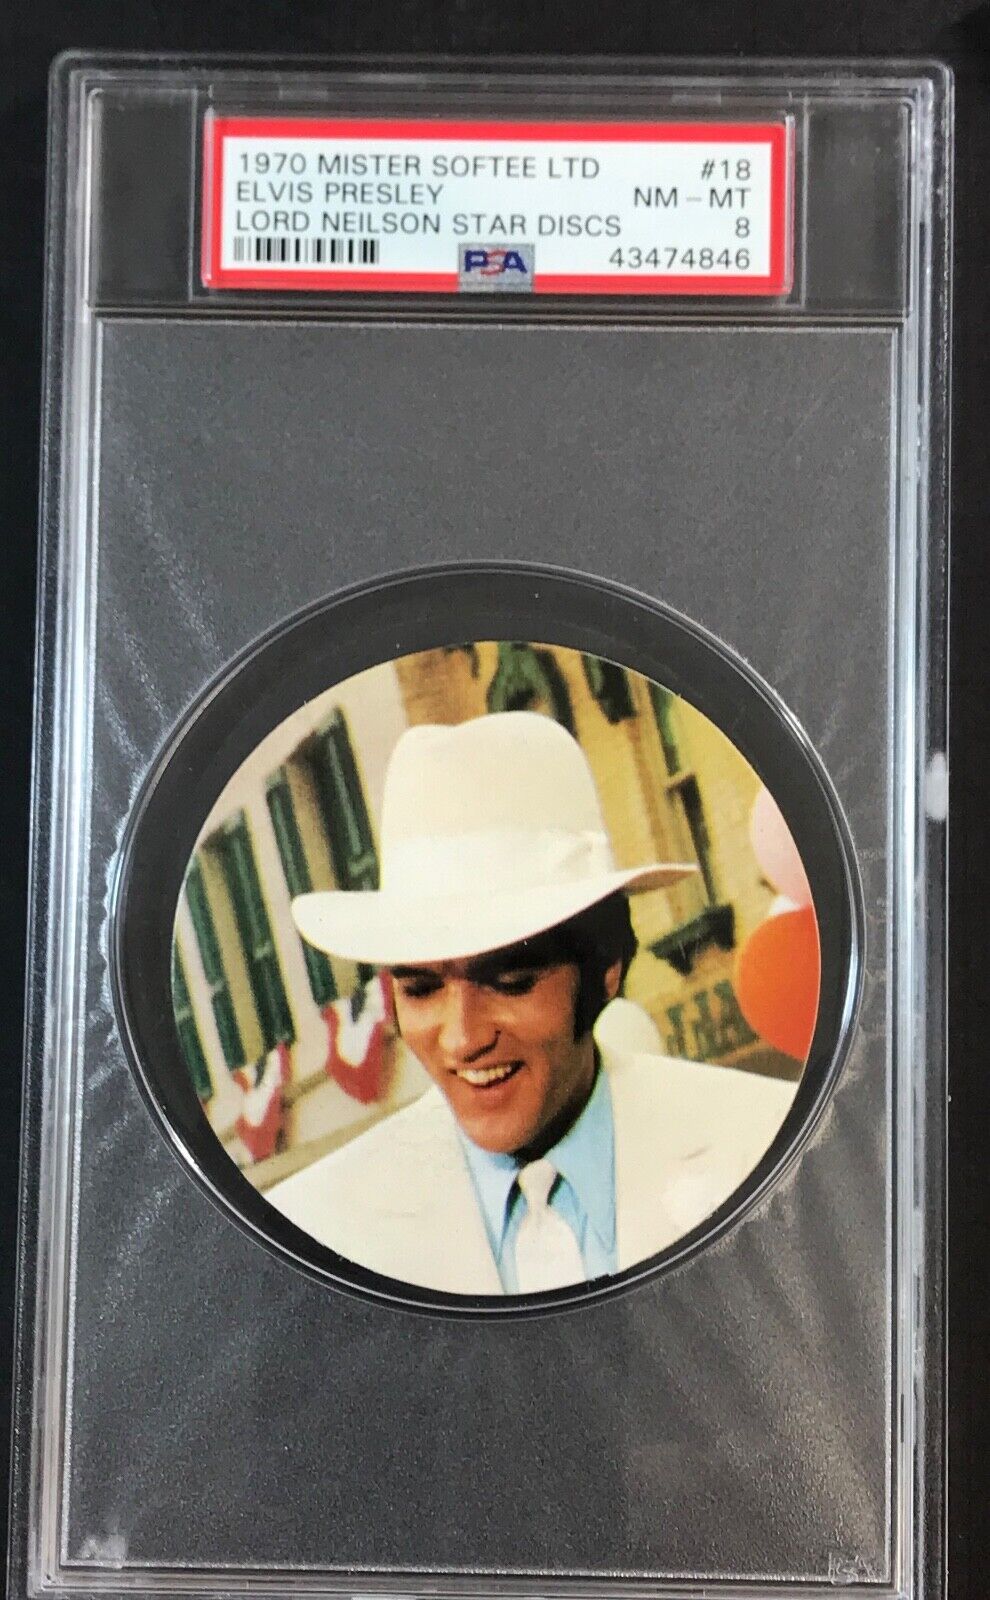 1970 Mister Softee Ltd ELVIS PRESLEY #18 PSA 8 NM-MT Lord Neilson Star Discs